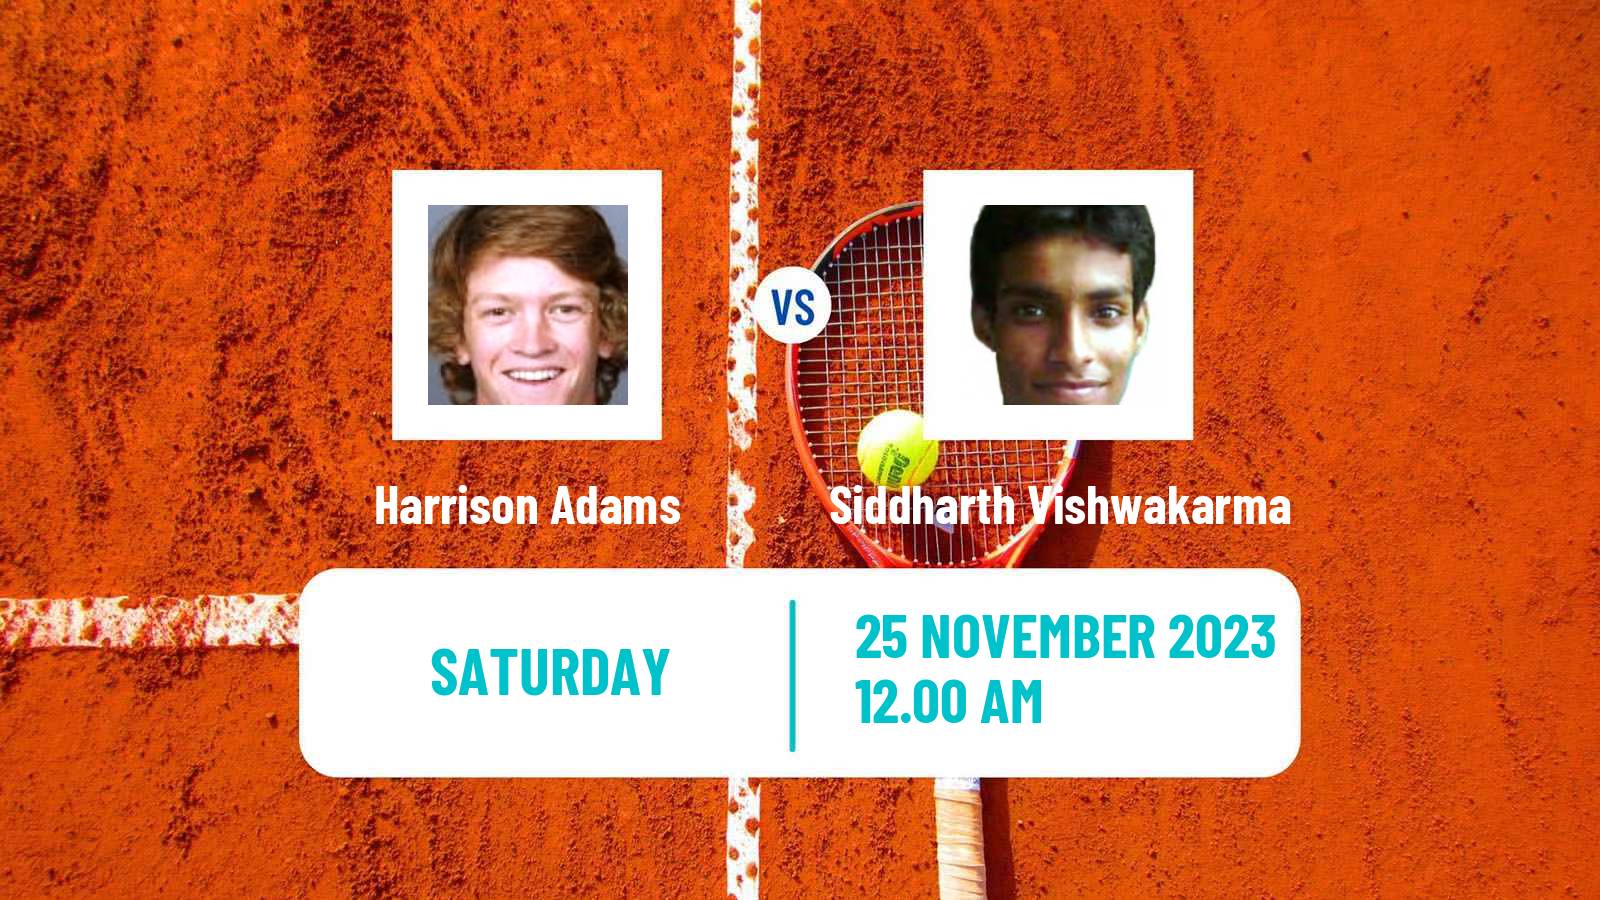 Tennis ITF M25 Mumbai Men Harrison Adams - Siddharth Vishwakarma